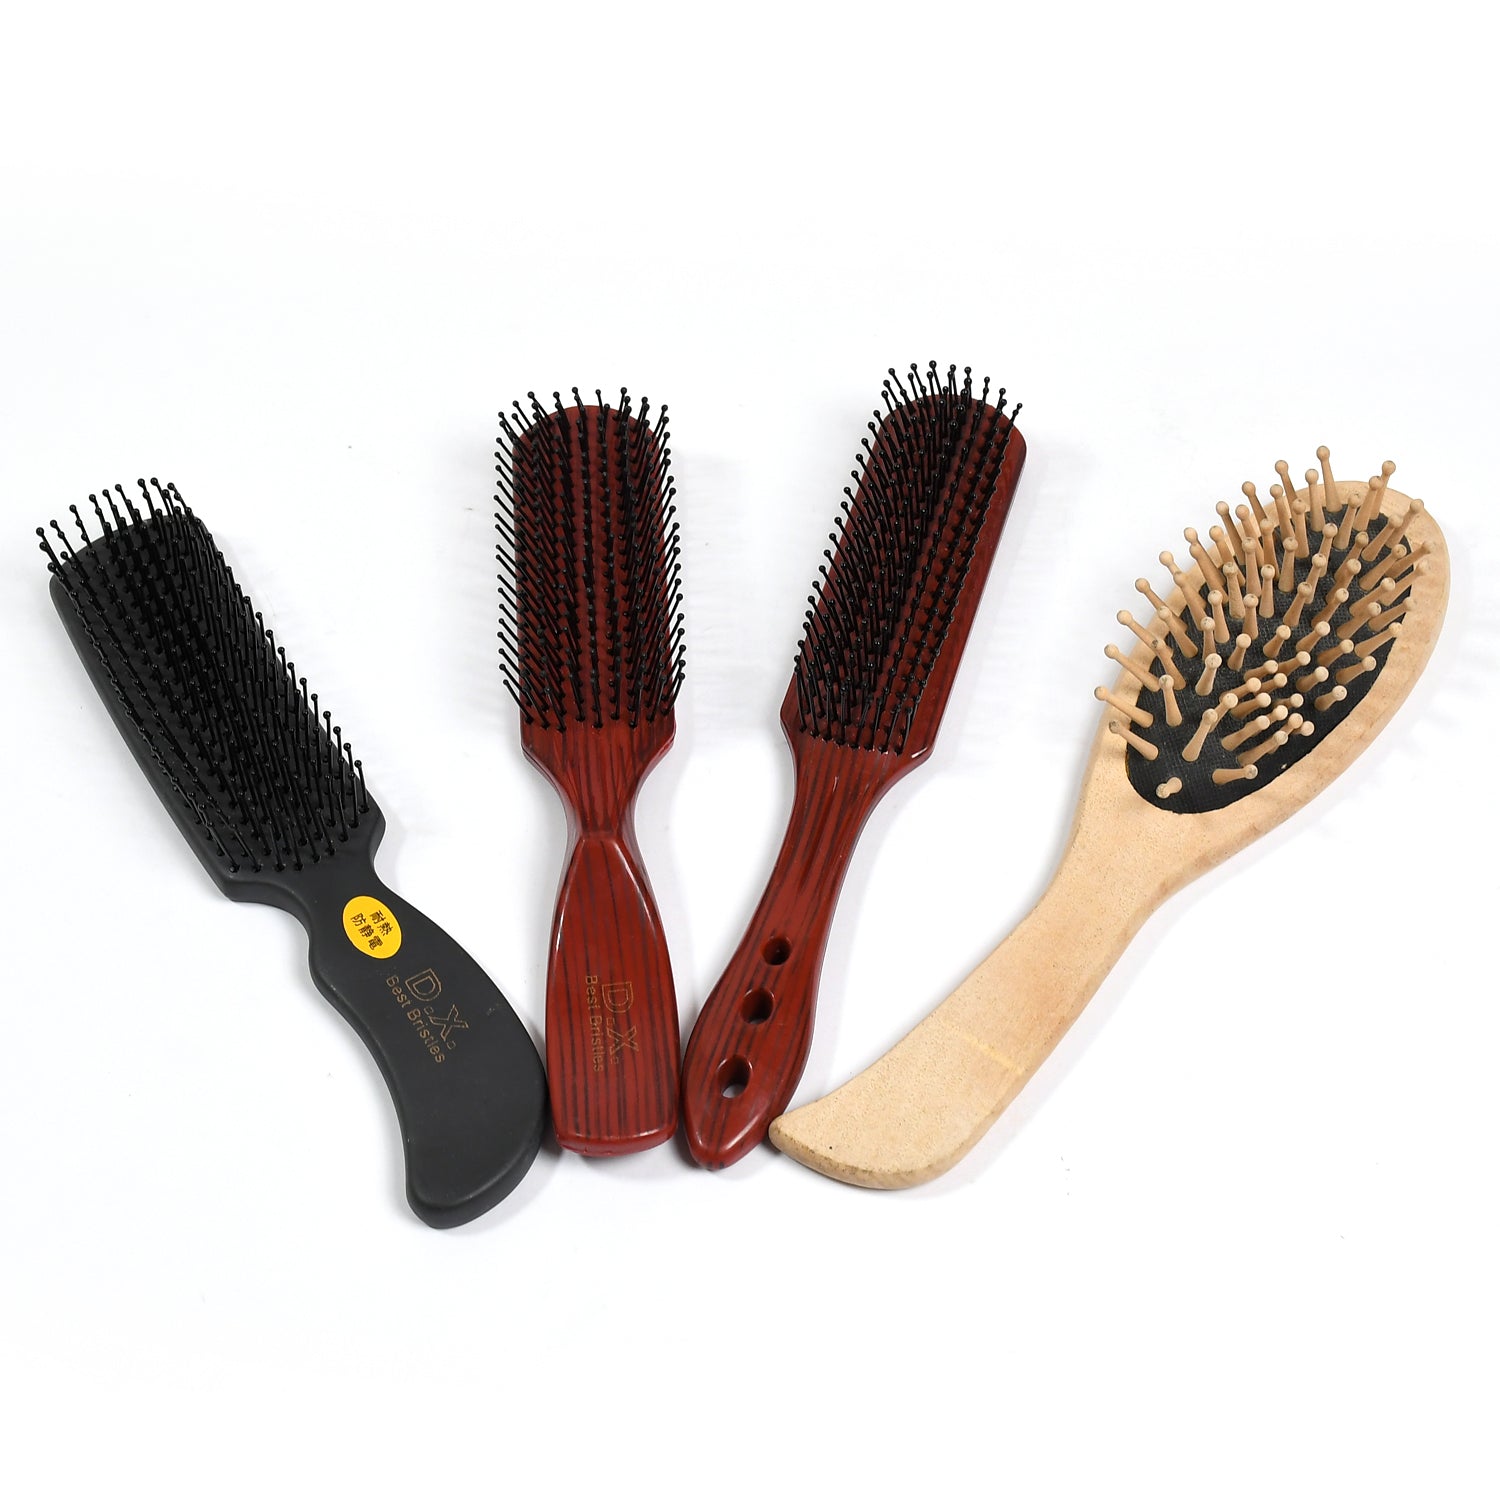 1405 Salon Anti-Static Hairdressing Hair Styling Comb Brush Tool (1 pc) DeoDap